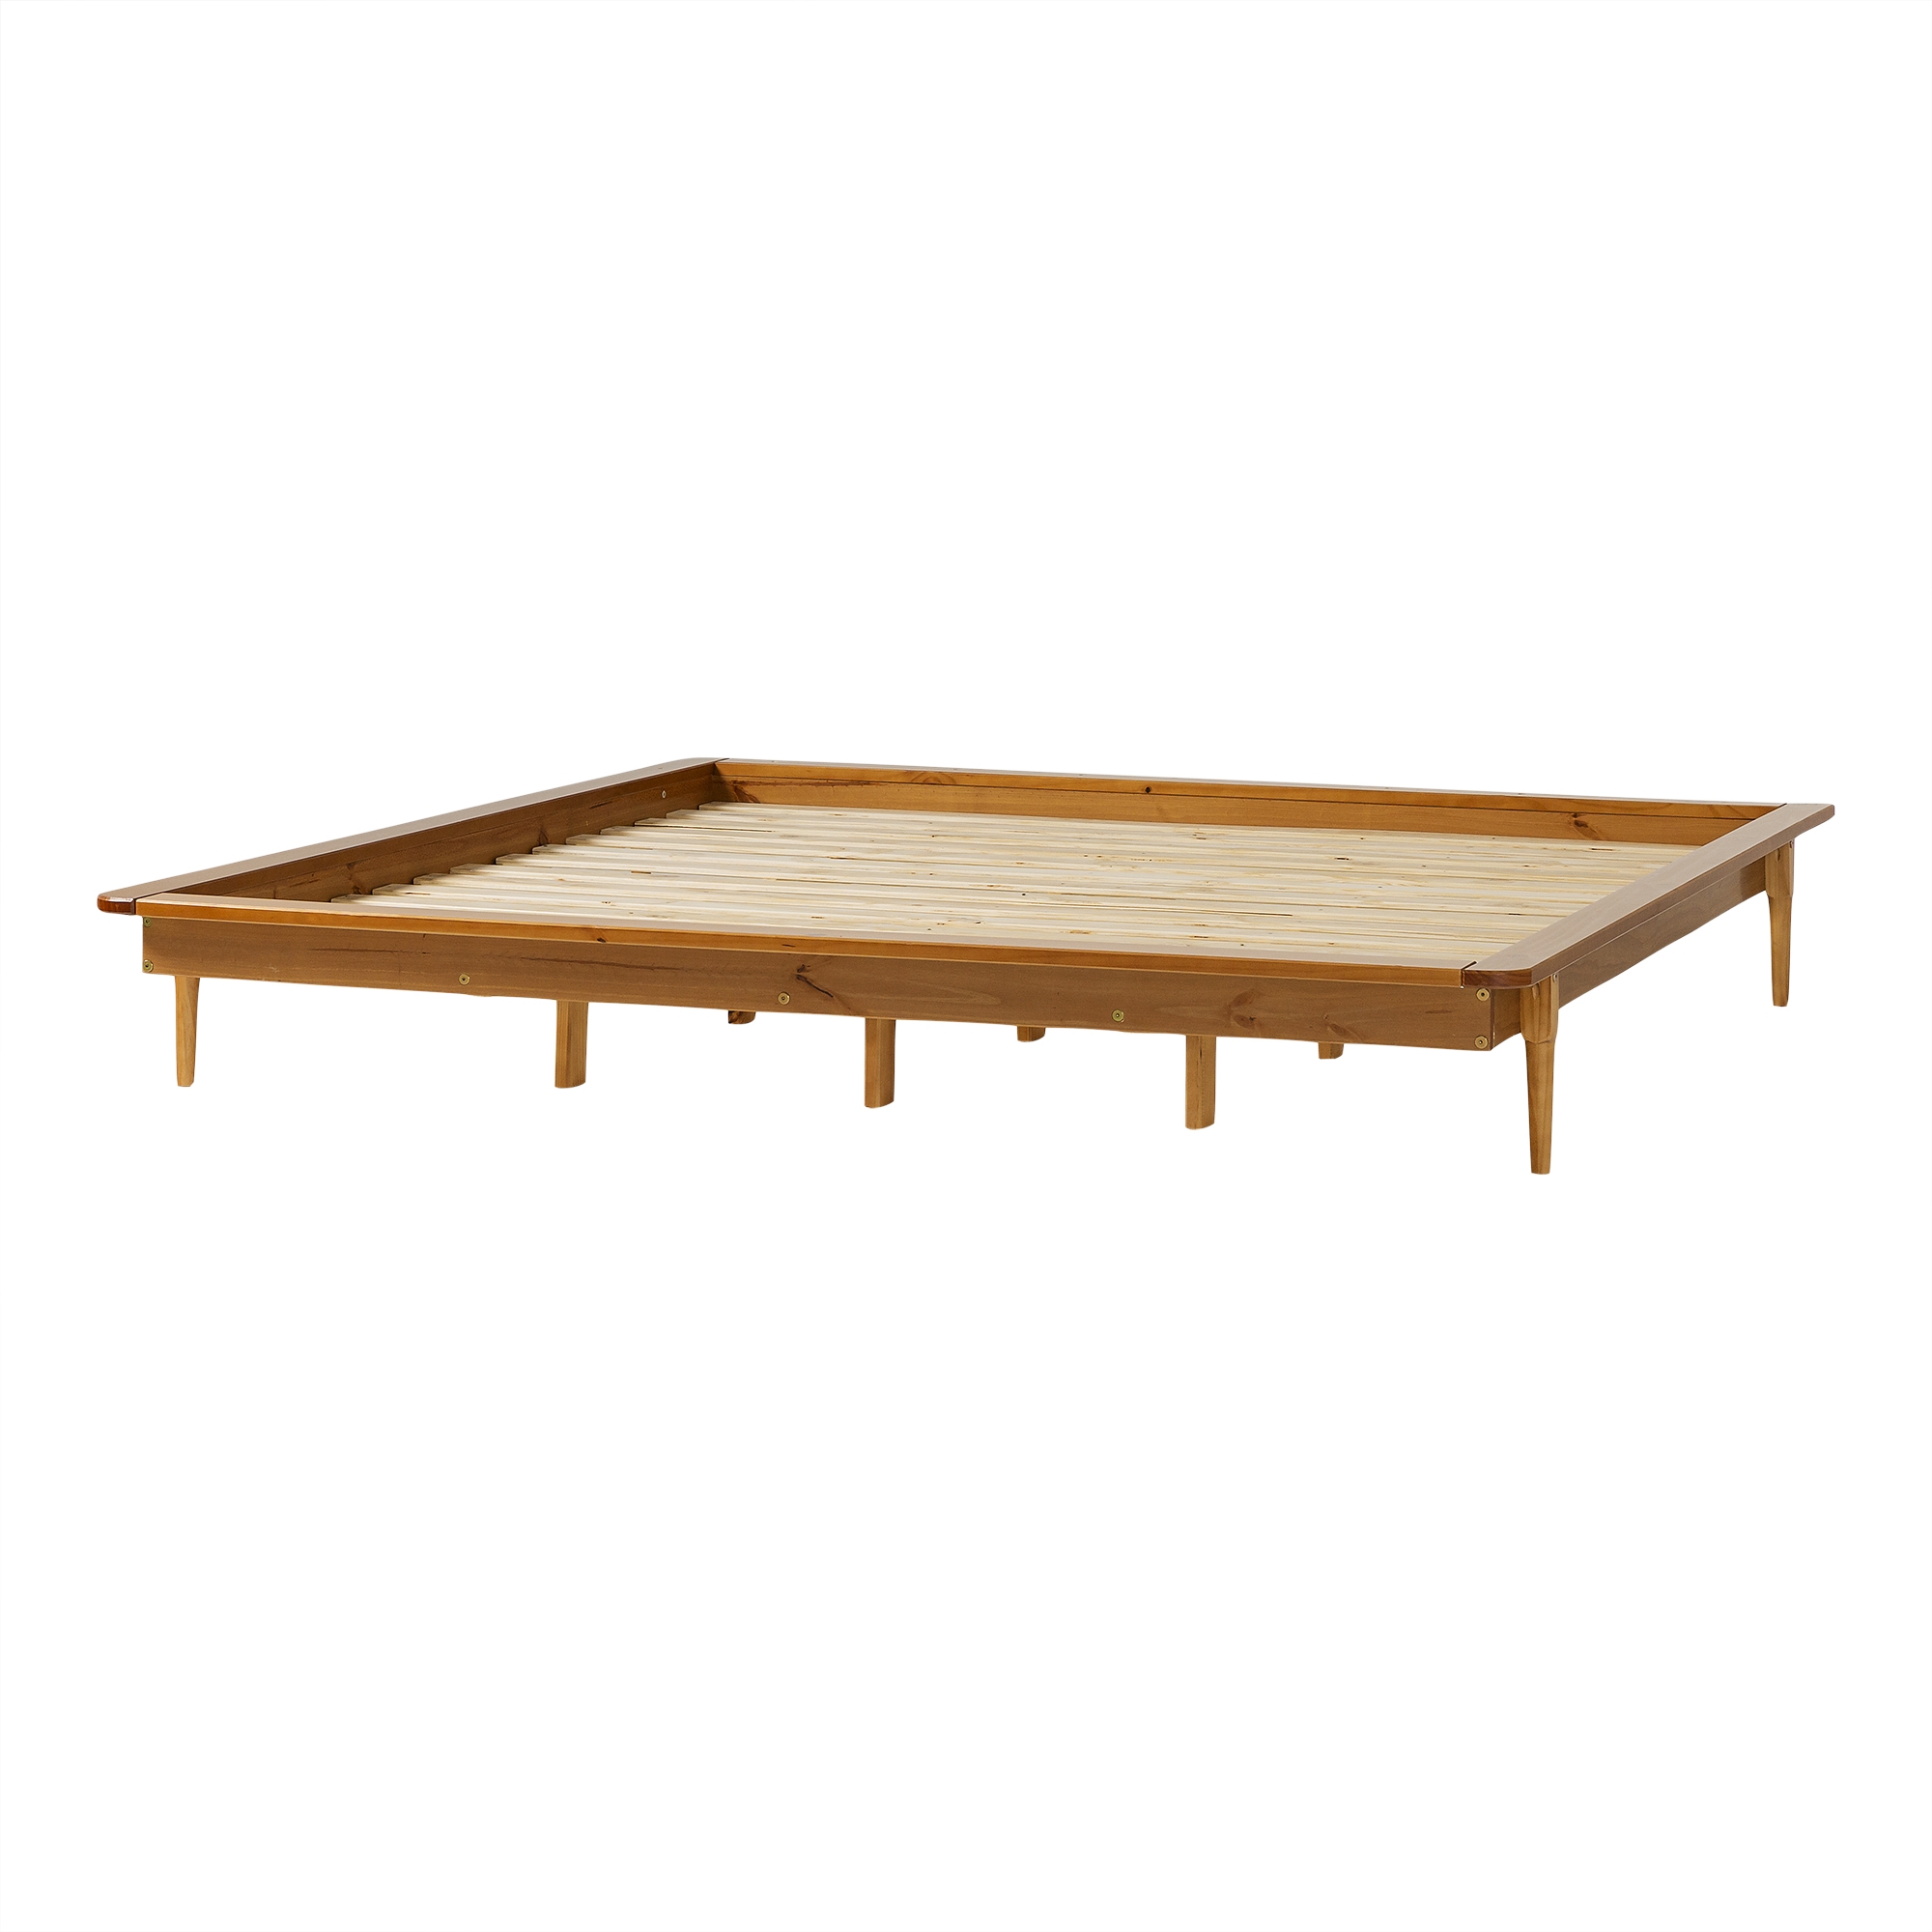 King Mid Century Modern Solid Wood Platform Bed - Caramel - Image 2